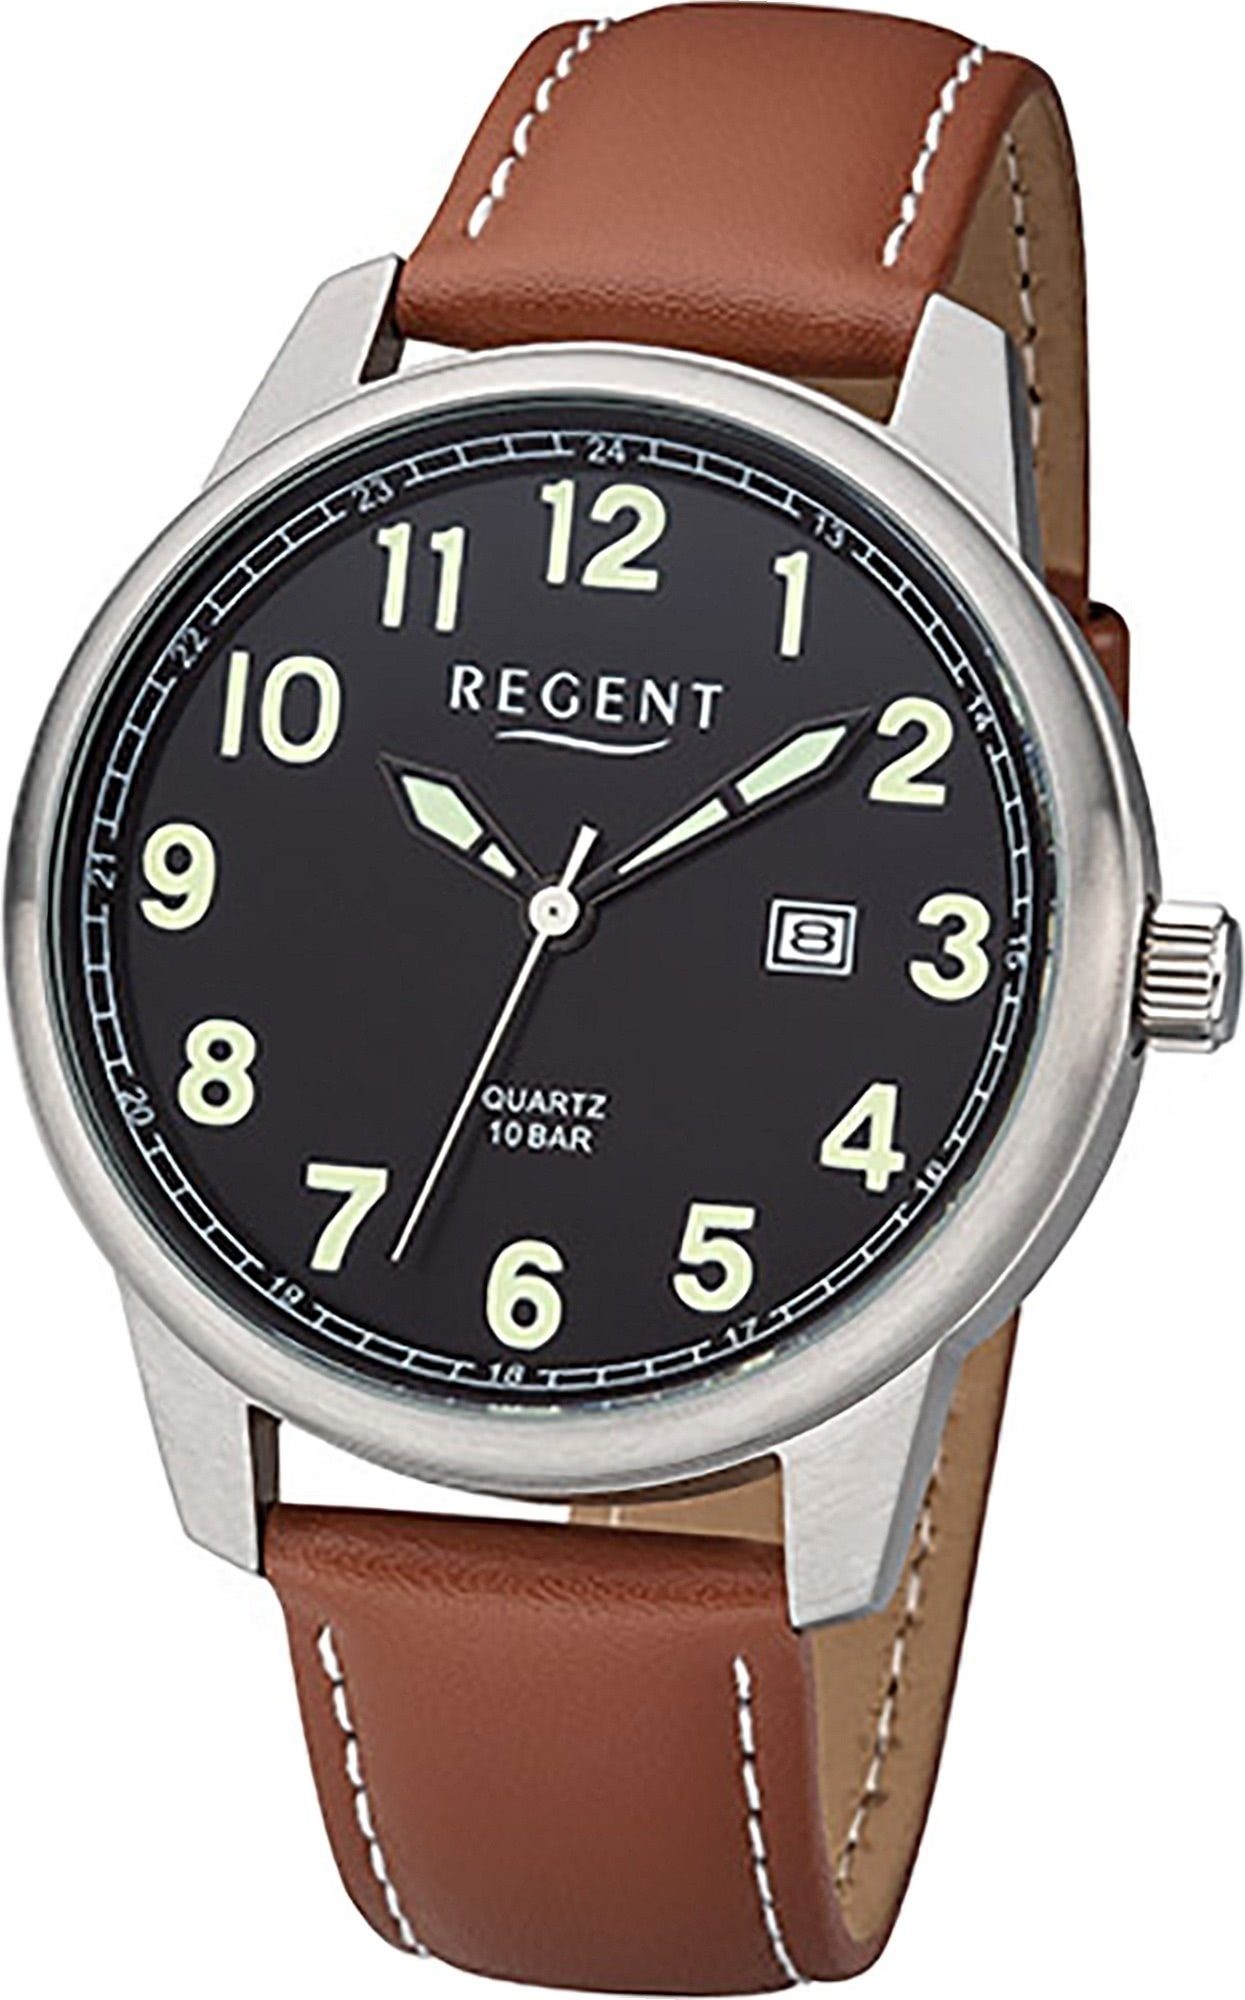 Regent Quarzuhr Regent Leder Herren Uhr F-1239 Analog, Herrenuhr Lederarmband braun, rundes Gehäuse, groß (ca. 41mm)